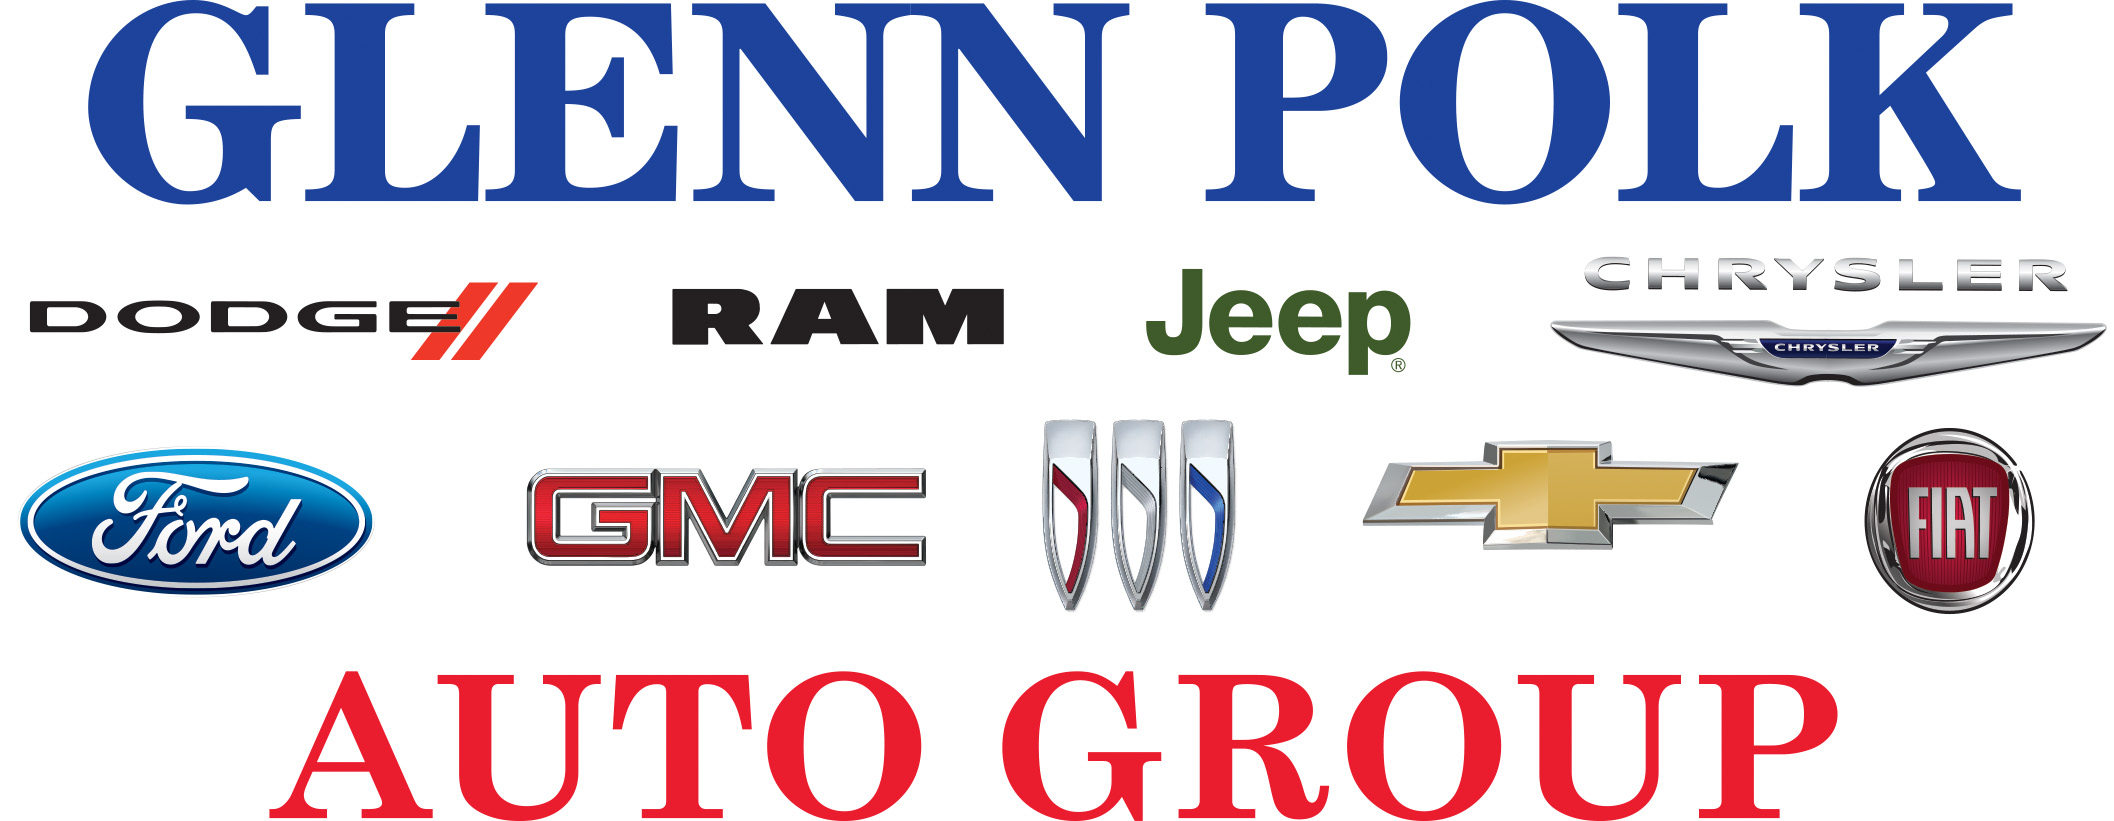 Glenn Polk Auto Group-logo